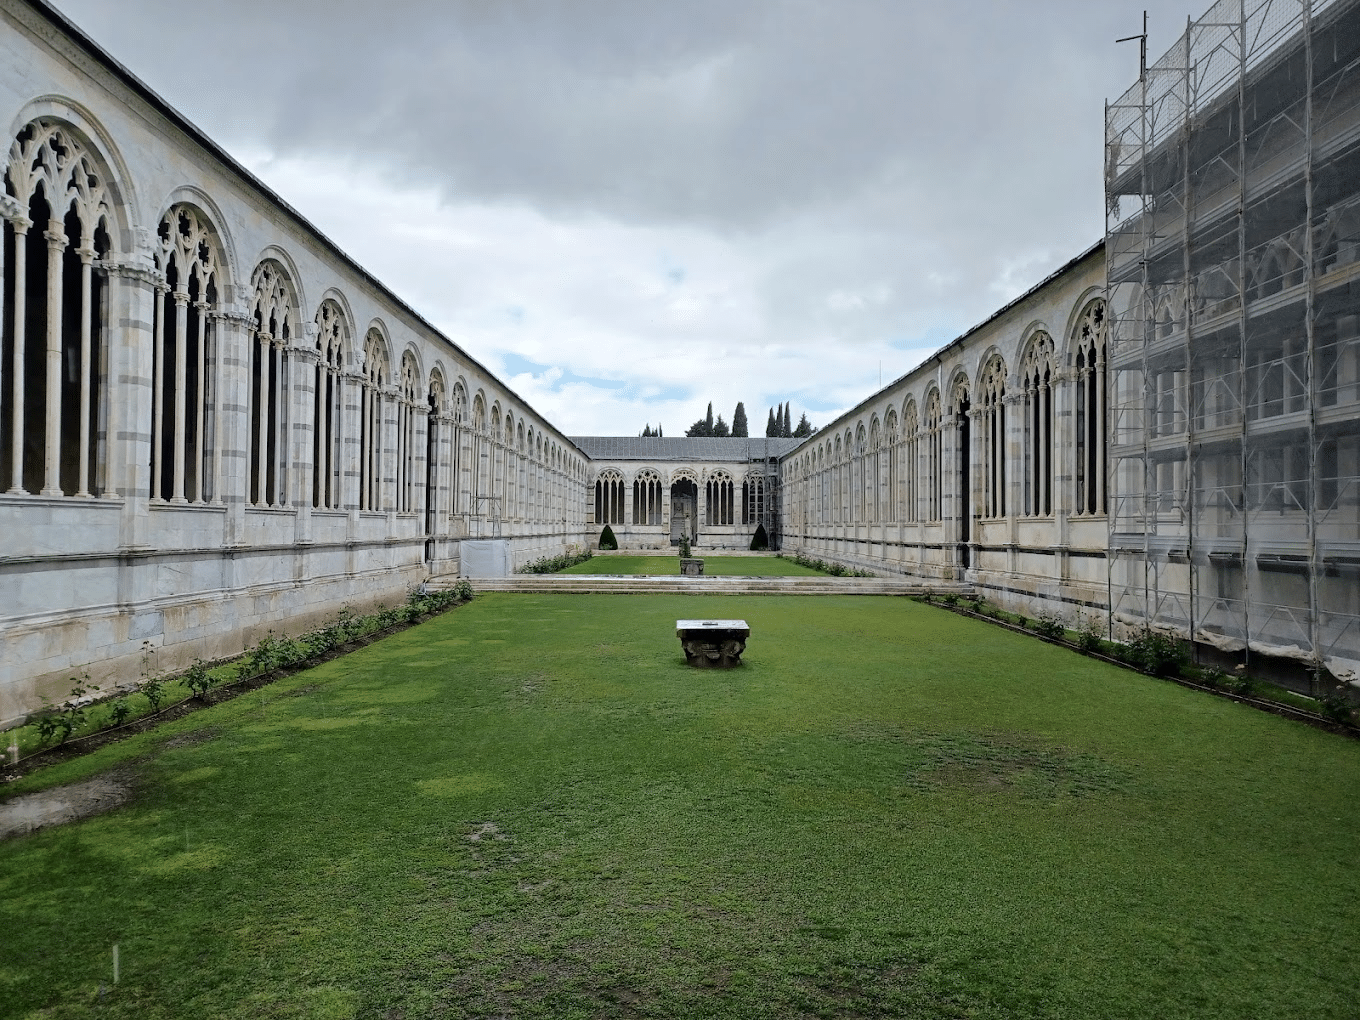 Visit the graveyard of Camposanto